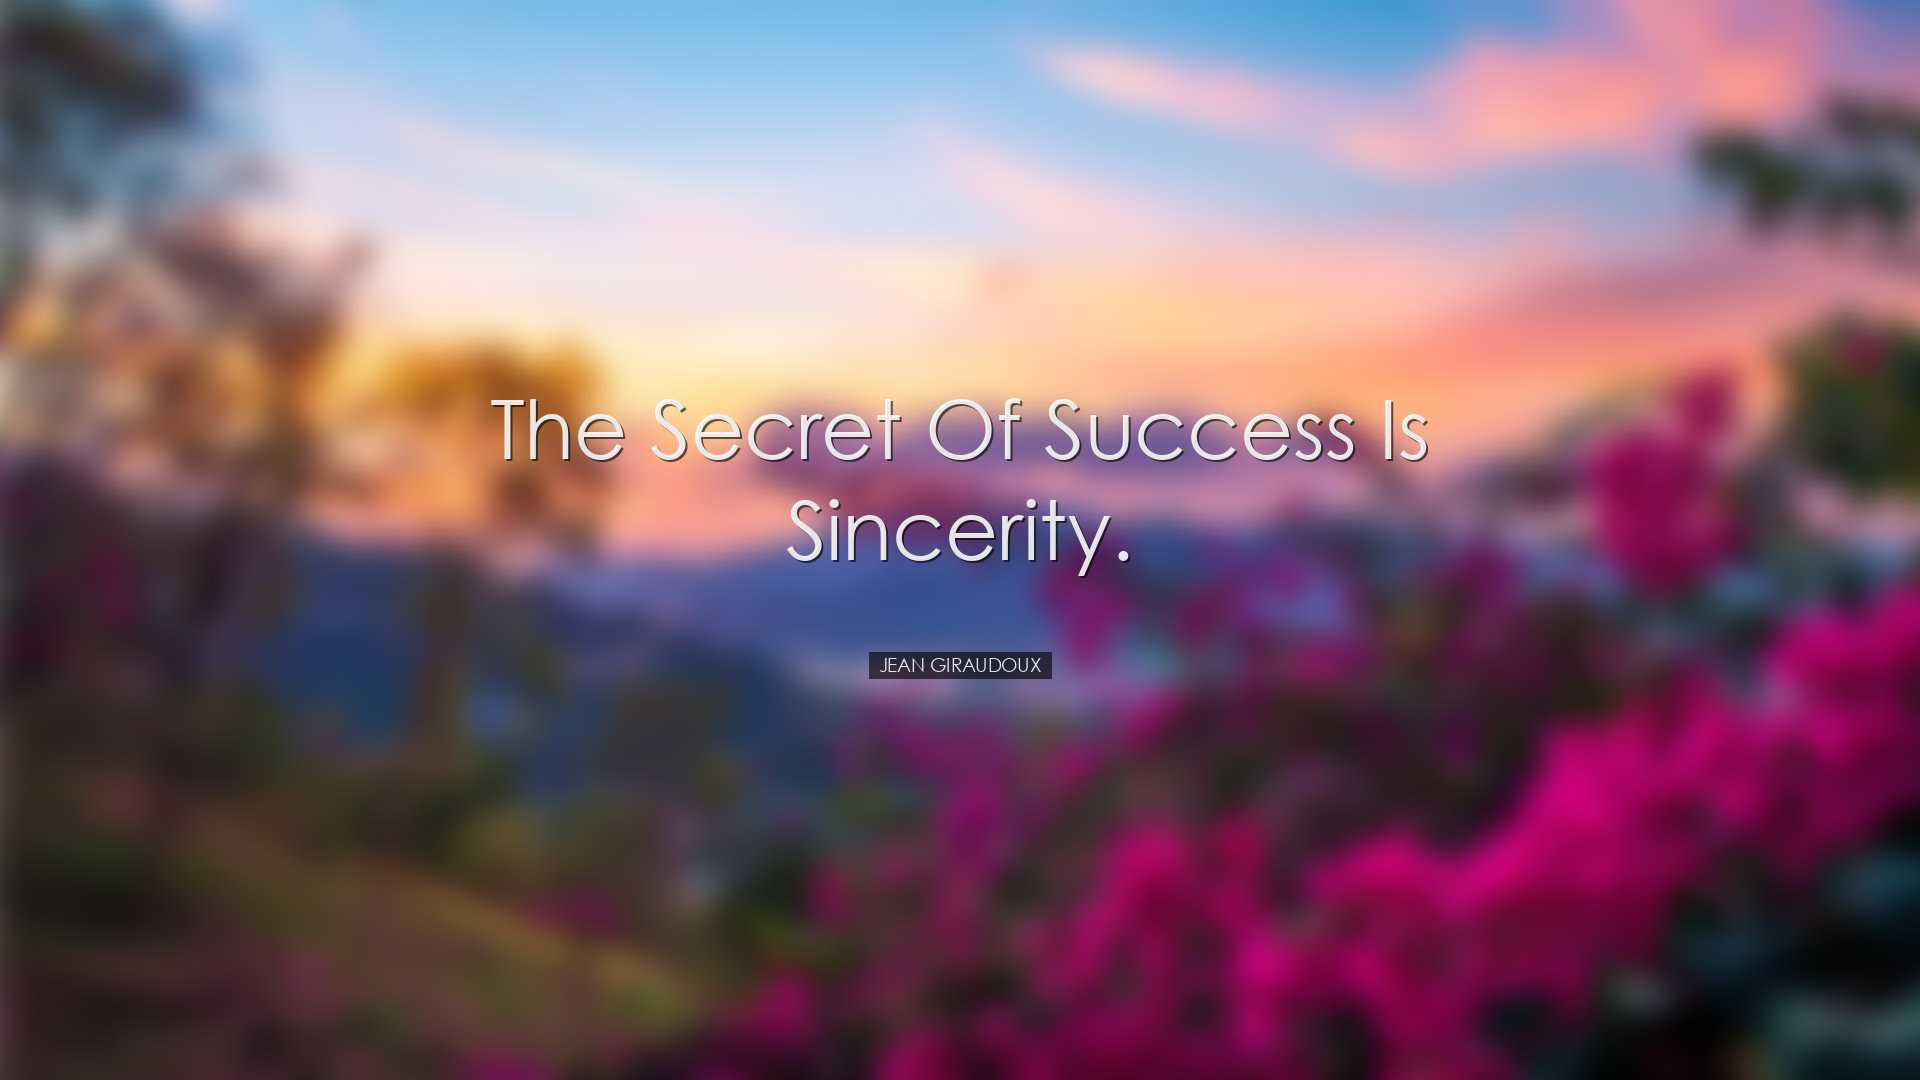 The secret of success is sincerity. - Jean Giraudoux